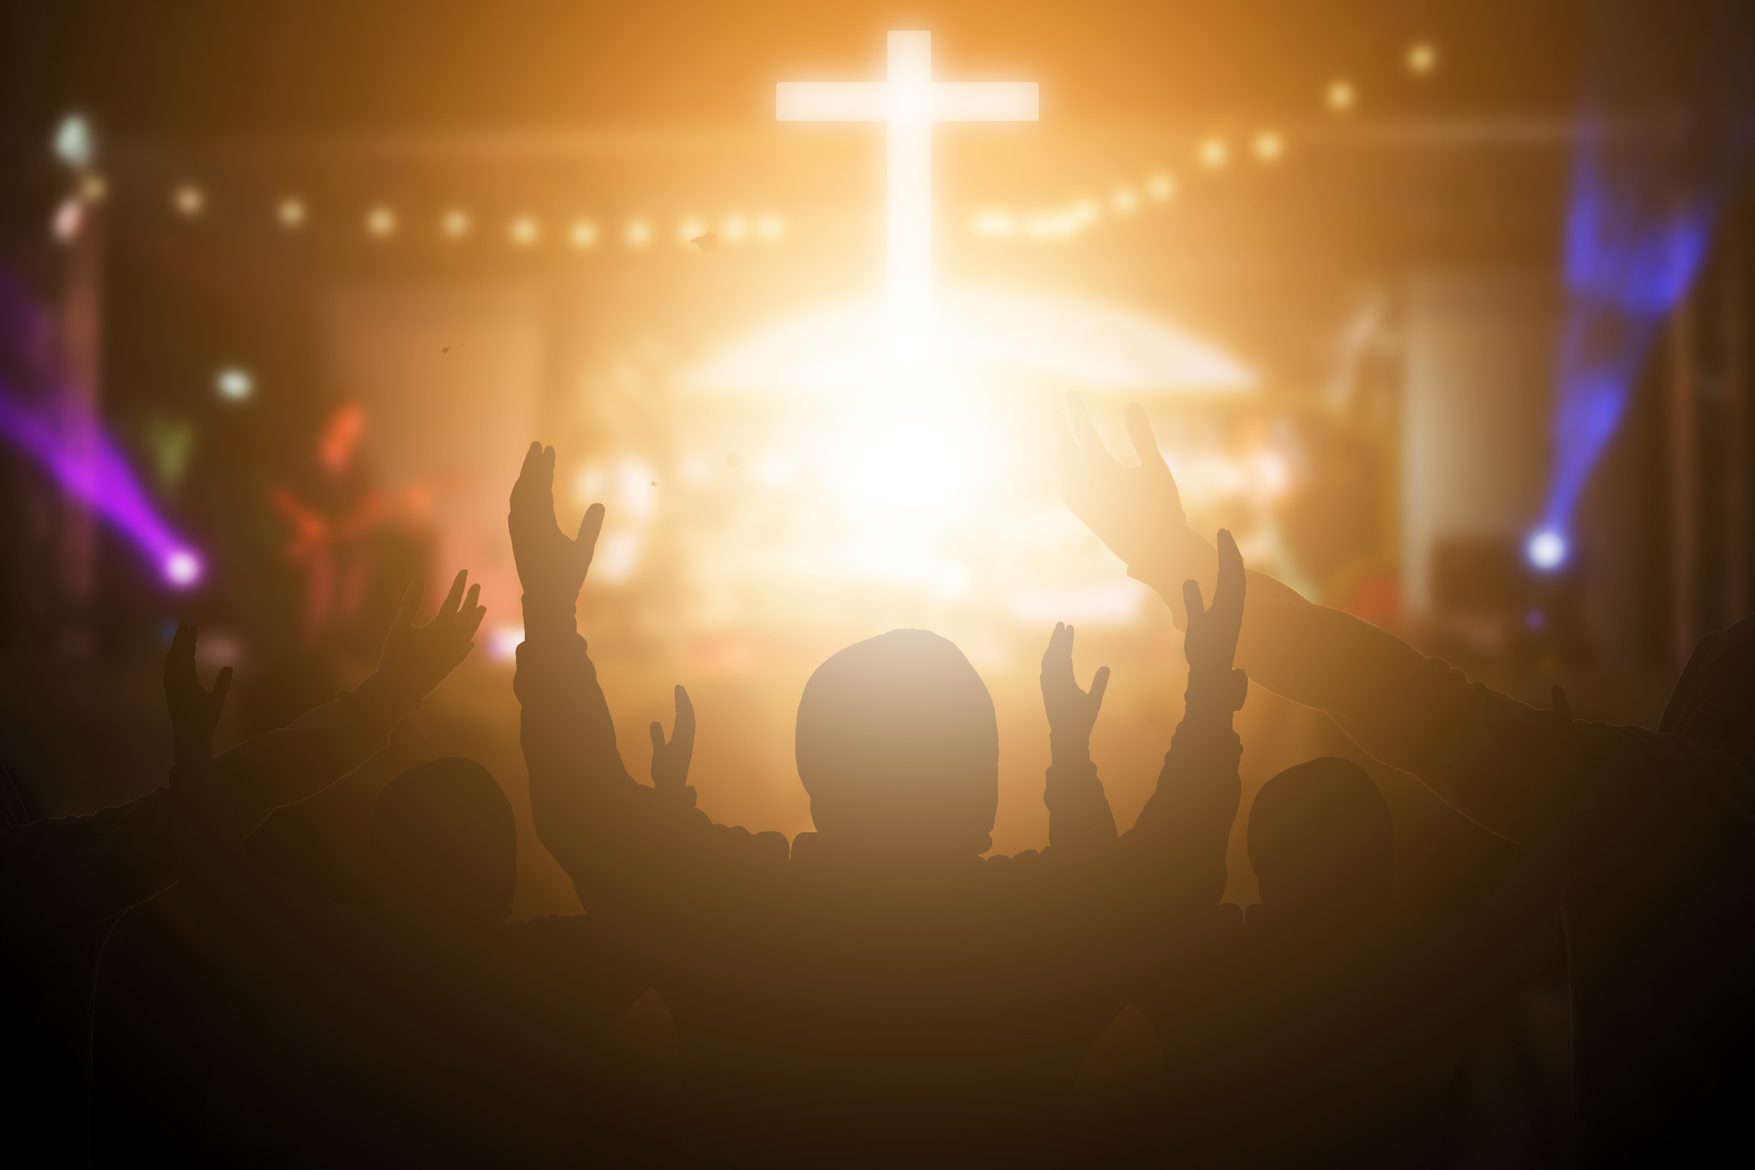 Christians Raising Their Hands in Praise and Worship